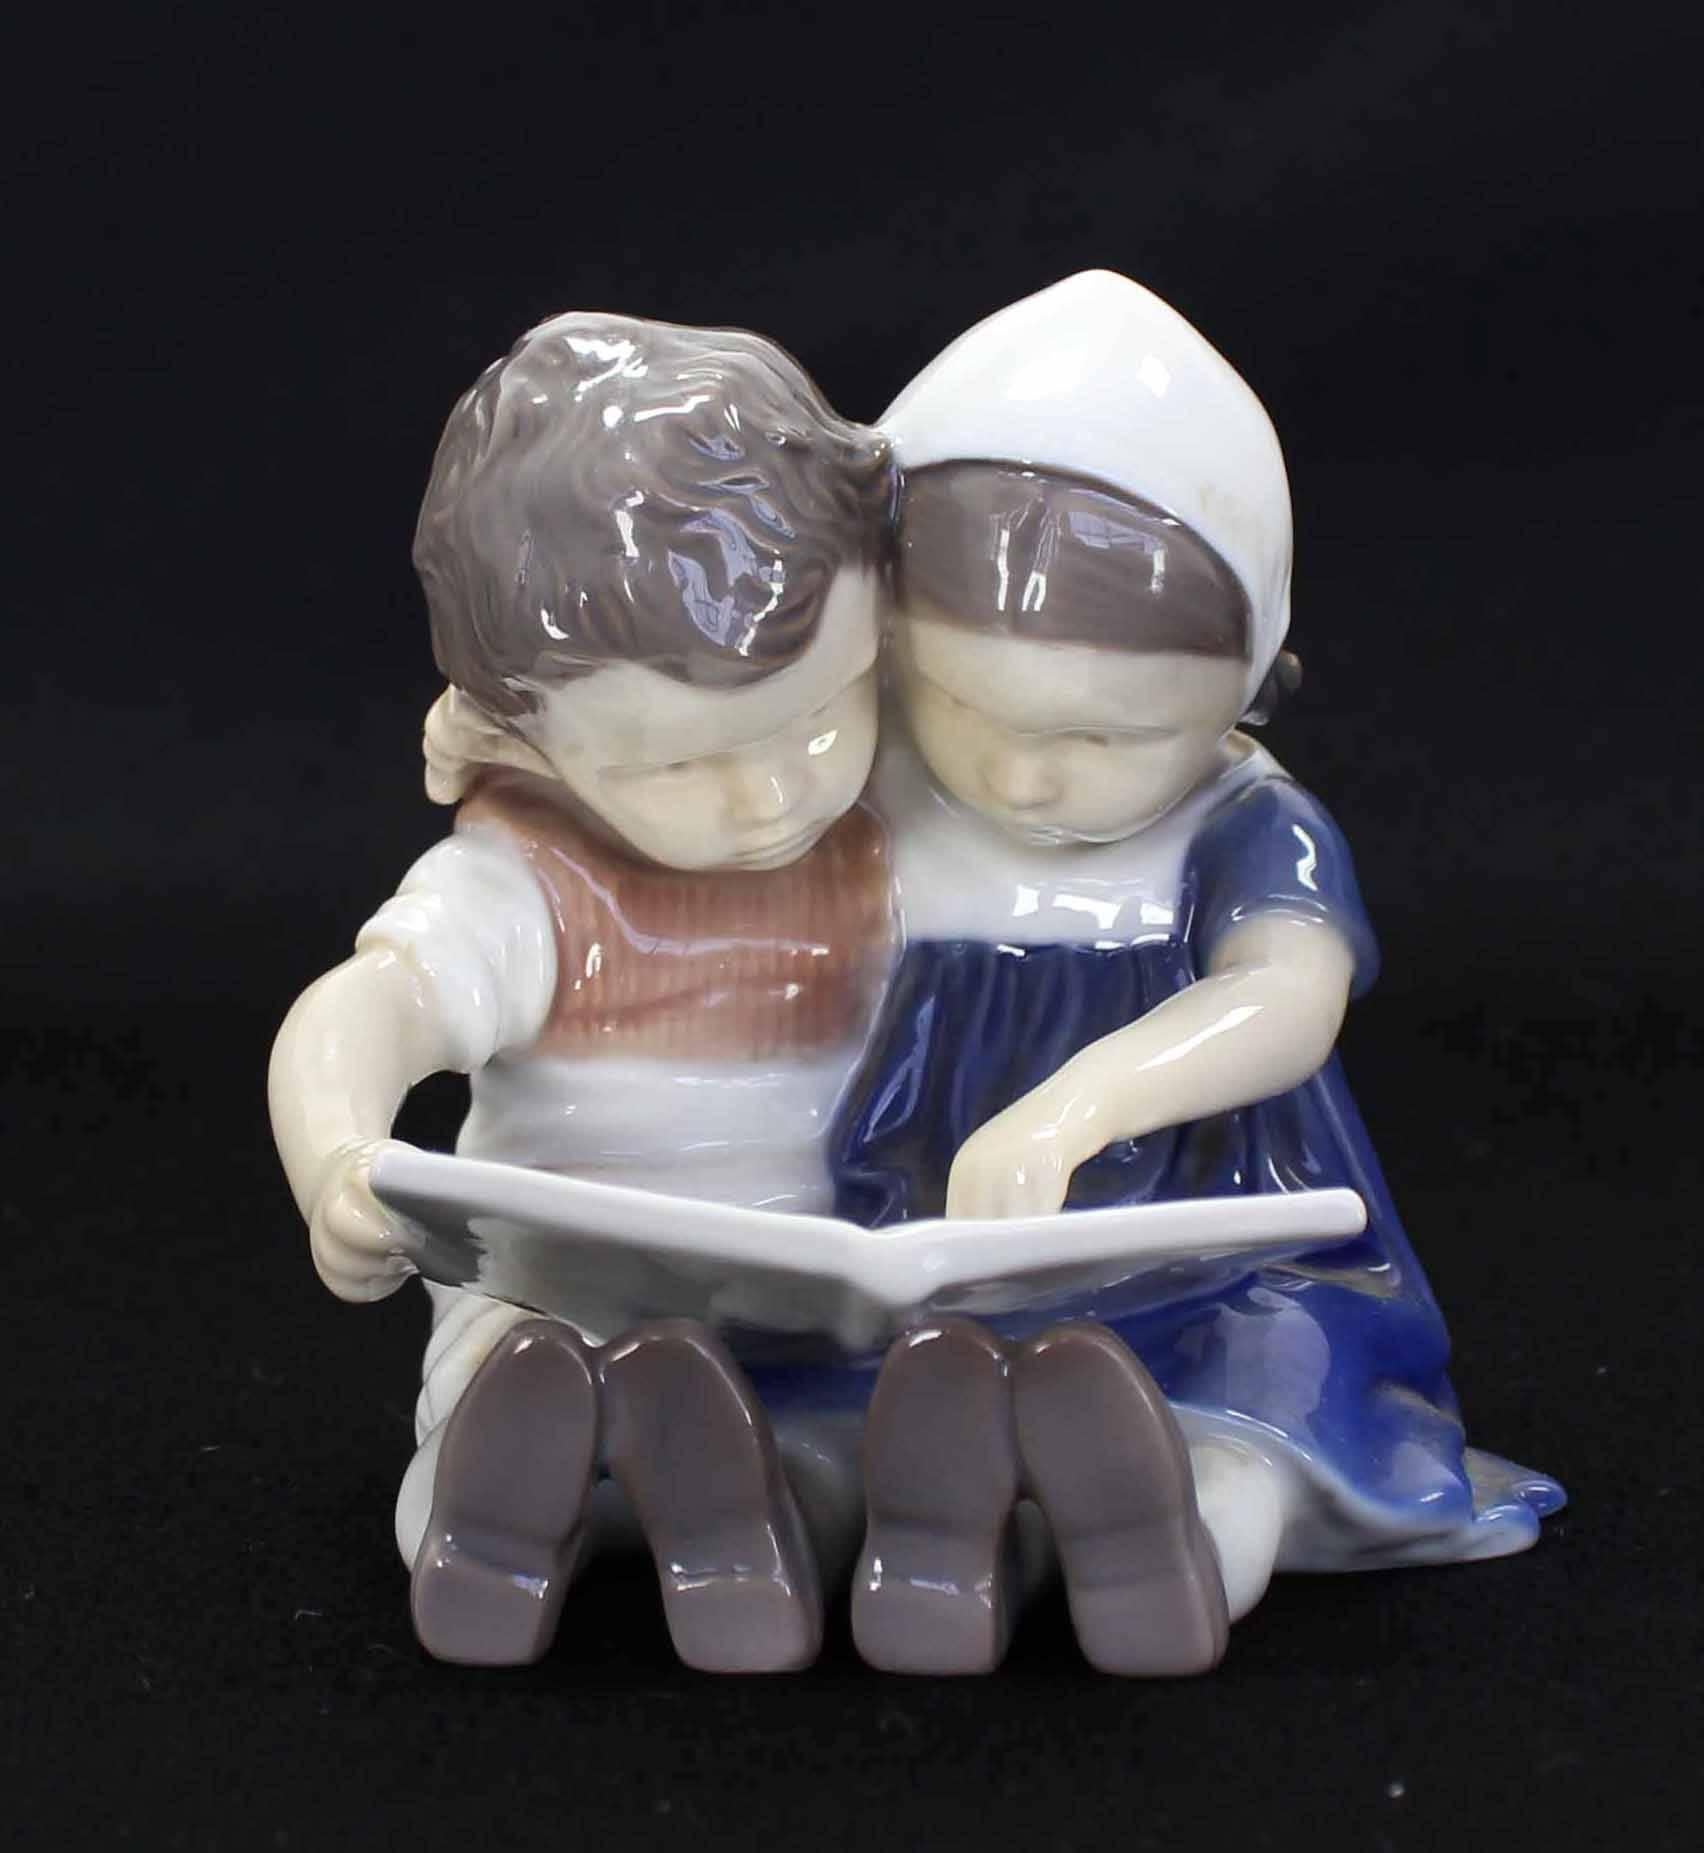 royal copenhagen figurines boy and girl